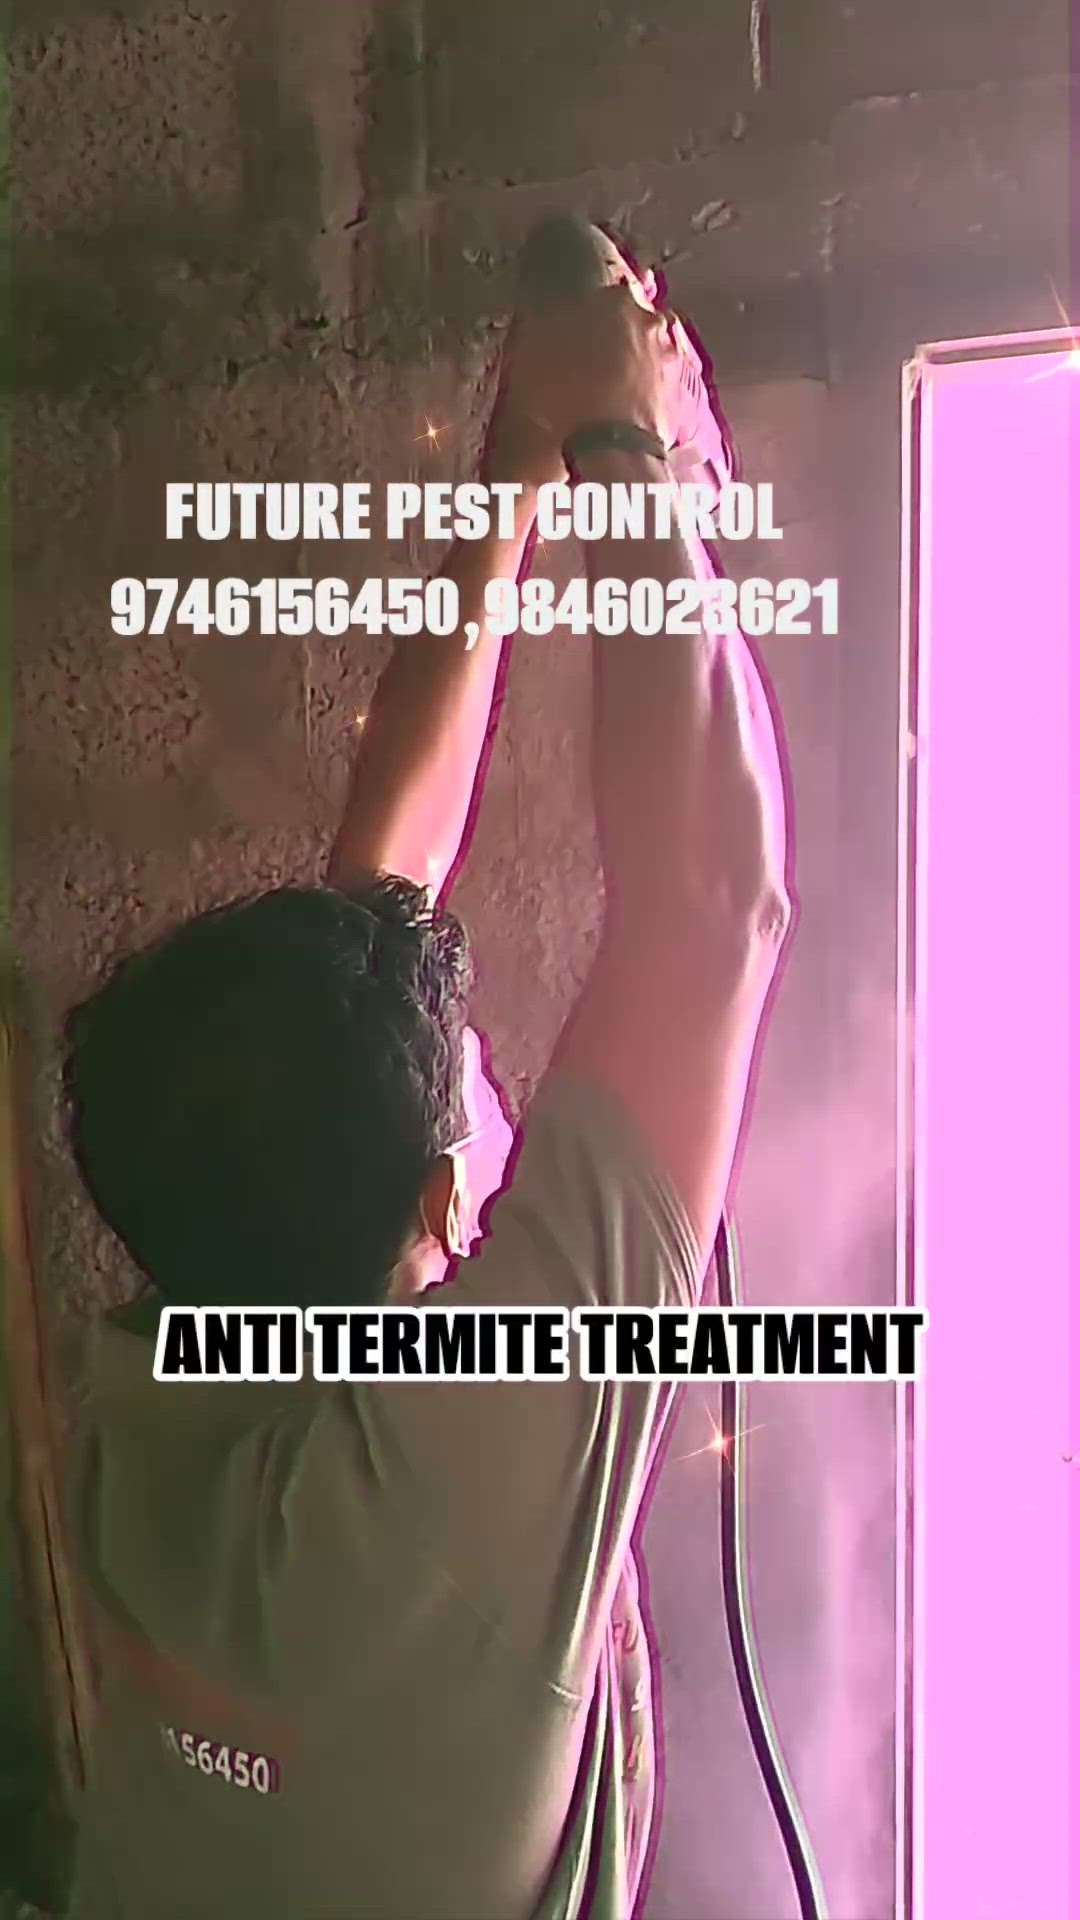 #national_pest_control #pestalcolortheme #pestcontrol #sk_pest #quicksure_pest_control #pest #anti-pest #pestfree #pestcontrolservices #pestmanagement #pestcontrollife #pesticide #Anti-Termite #antitermite #termitecontrol #constructio_termite_treatment #termiteproof #termitepipe #termiteresistant #termaite #termide #termiteproofkitchen #construction_termite_treatment #termitecontrolservice #futurepestcontrol #futureproofyourhome #all_kerala #allkeralapestcontrol #allkerala #lowcost #High_Quality